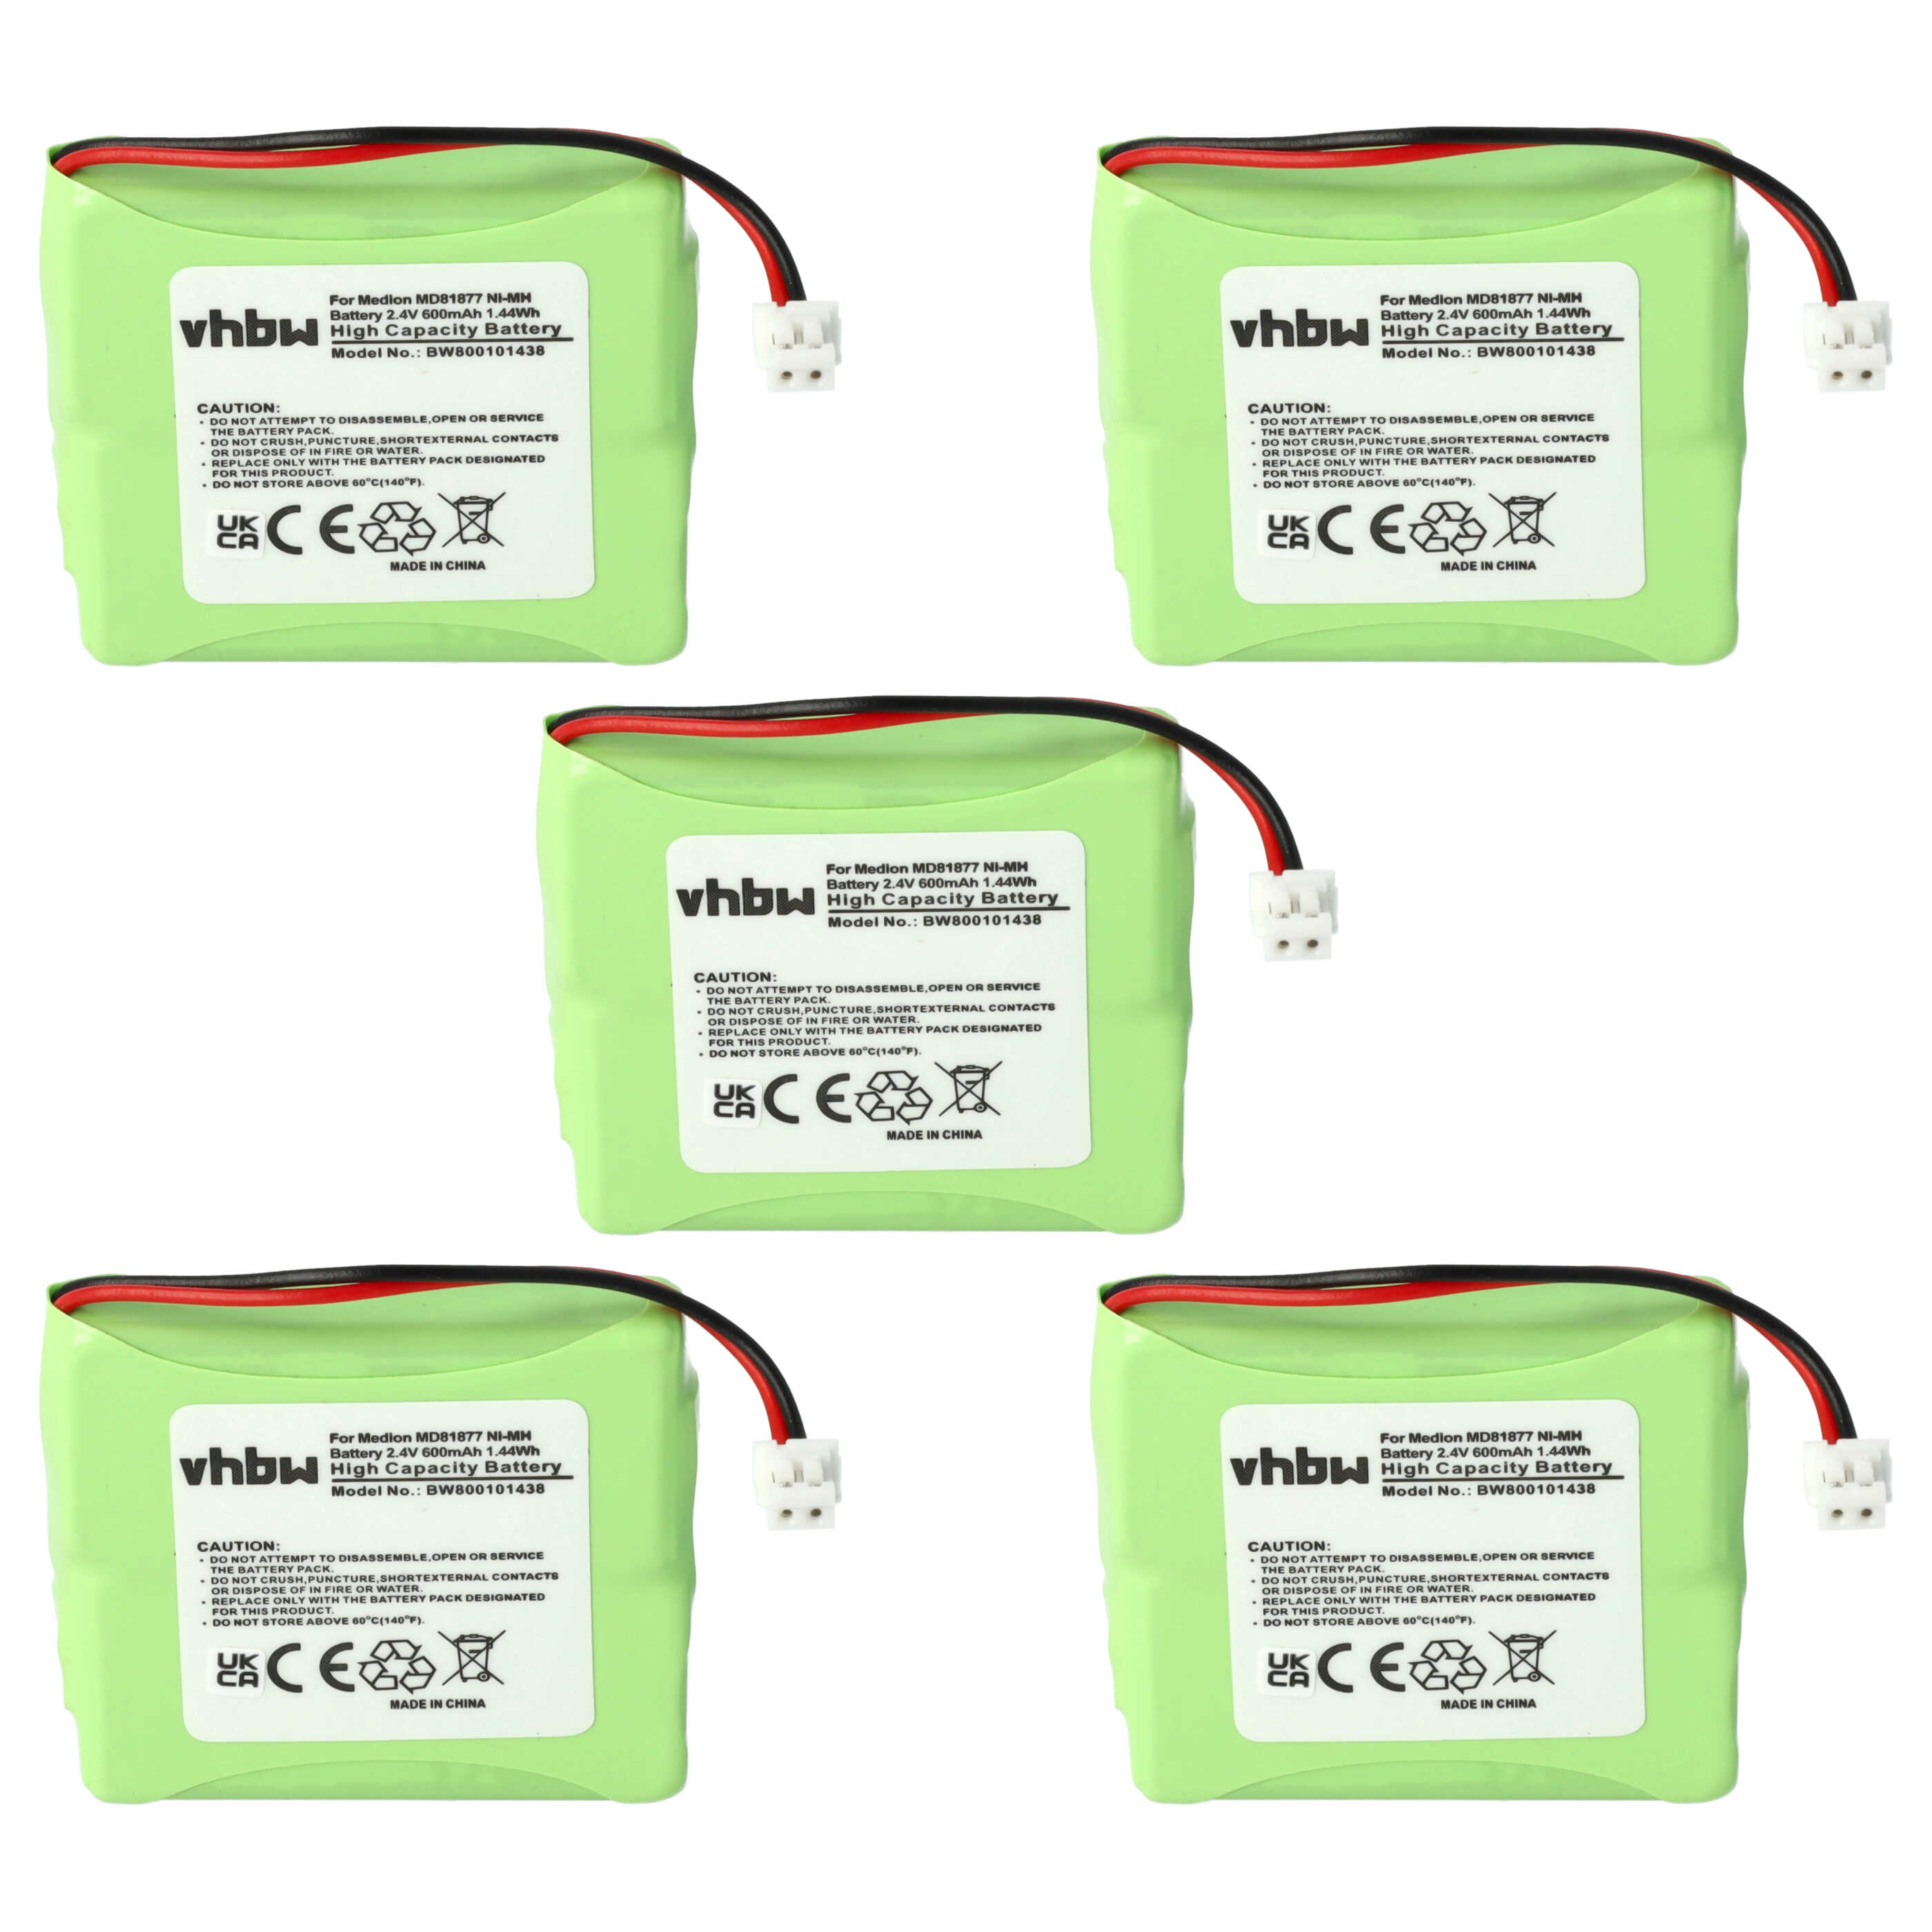 Landline Phone Battery (5 Units) Replacement for GP0827, 5M702BMX, GP0748, GP0747, GP0735 - 600mAh 2.4V NiMH